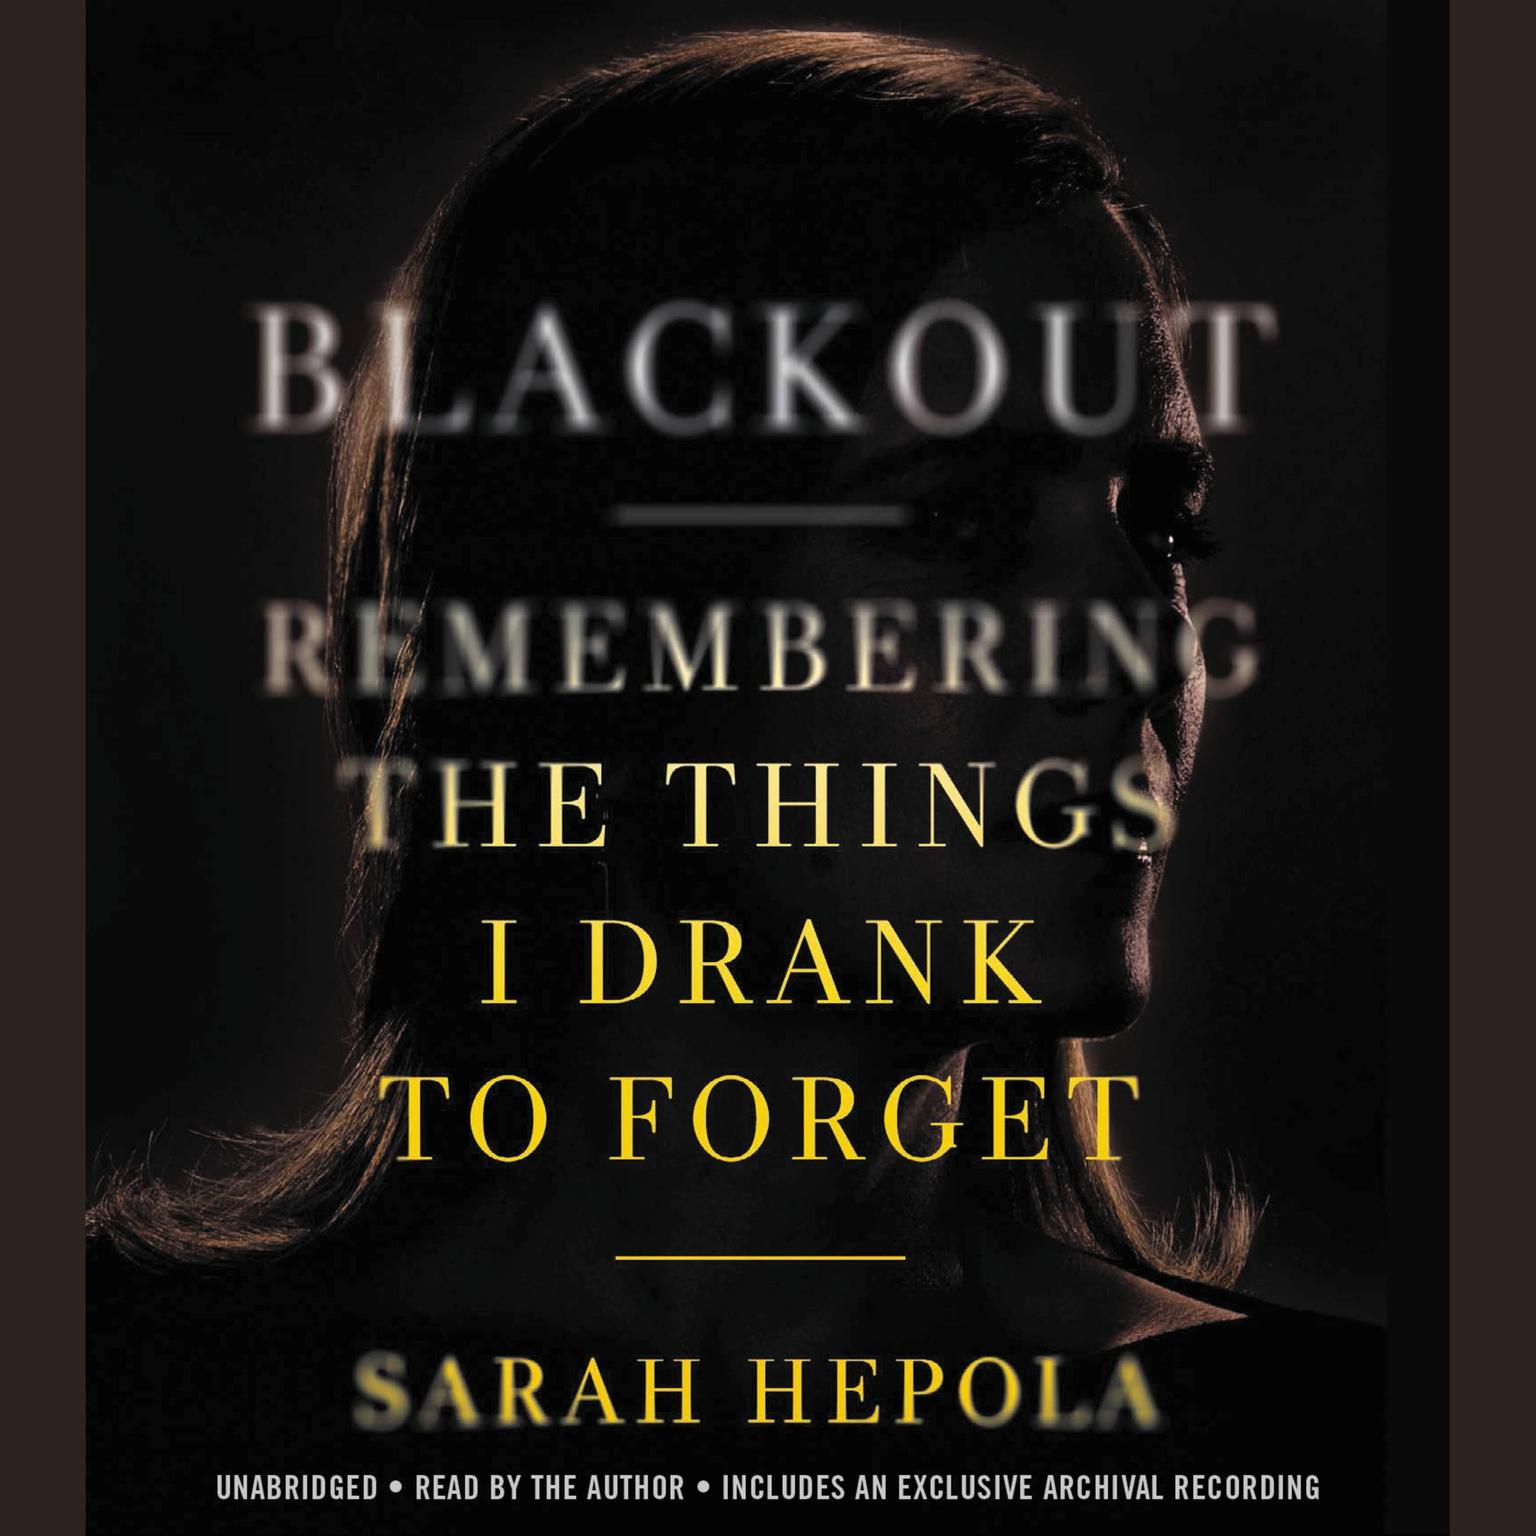 Blackout Audiobook By Sarah Hepola — Listen Instantly 